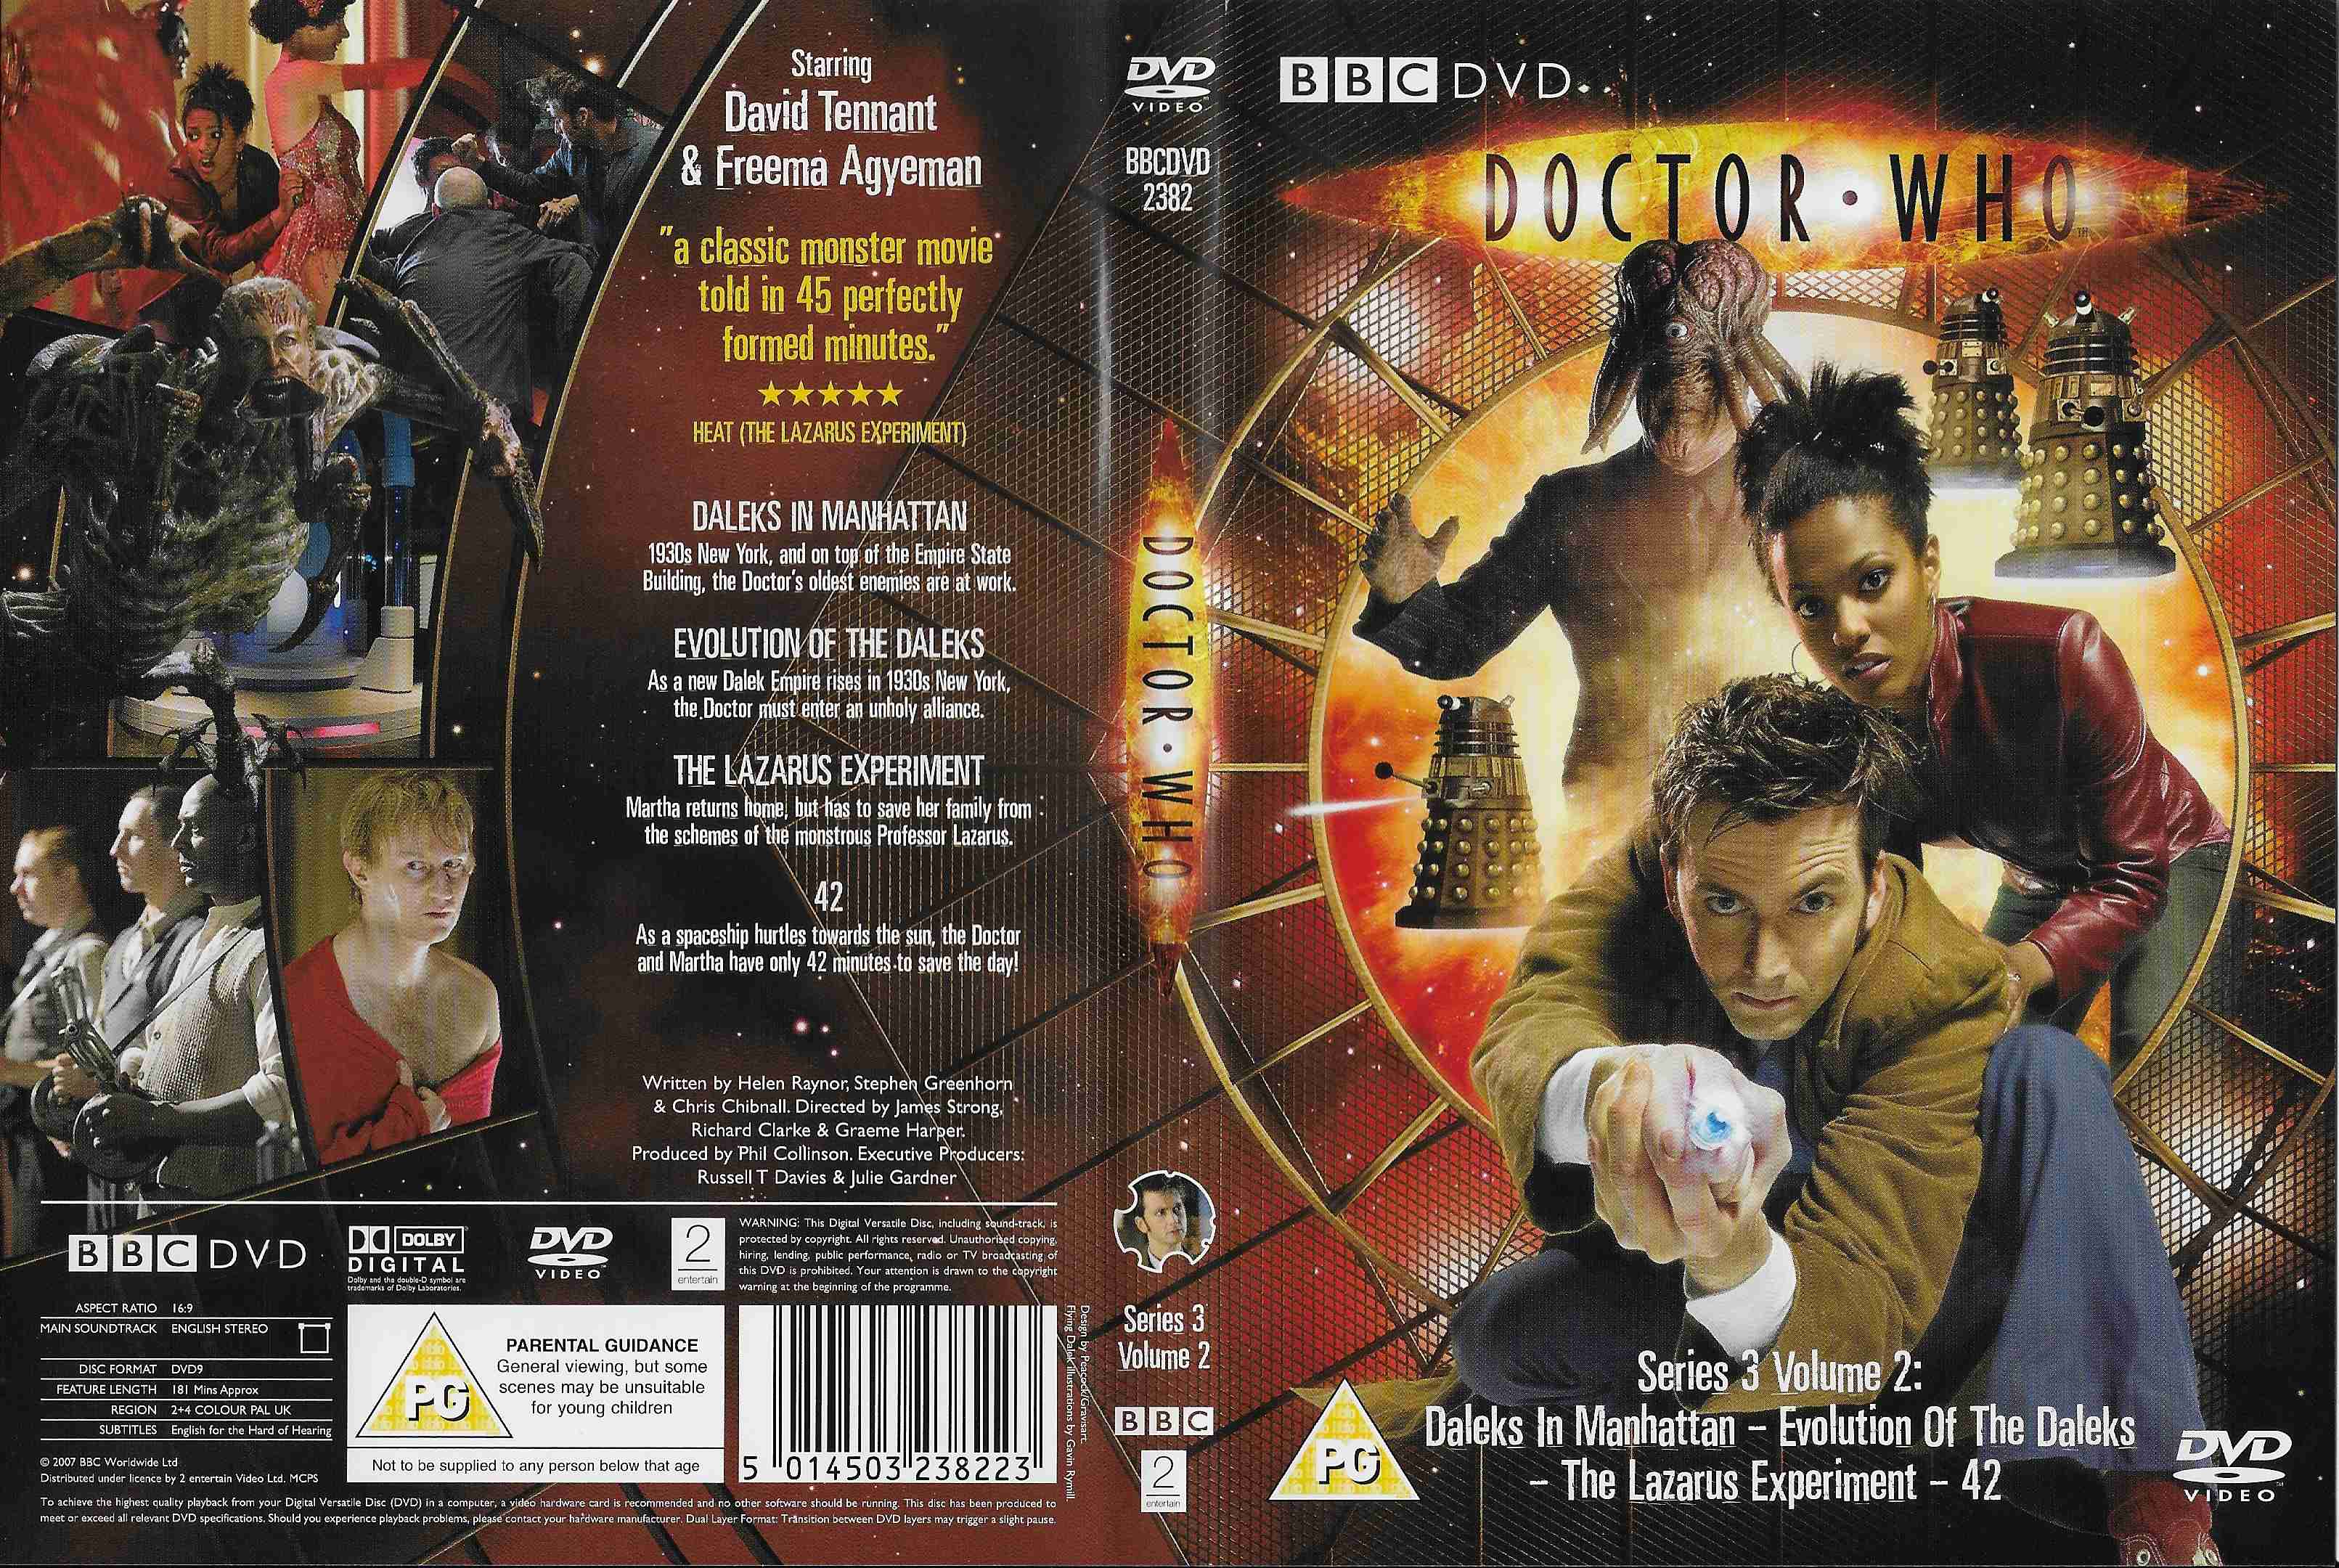 Back cover of BBCDVD 2382